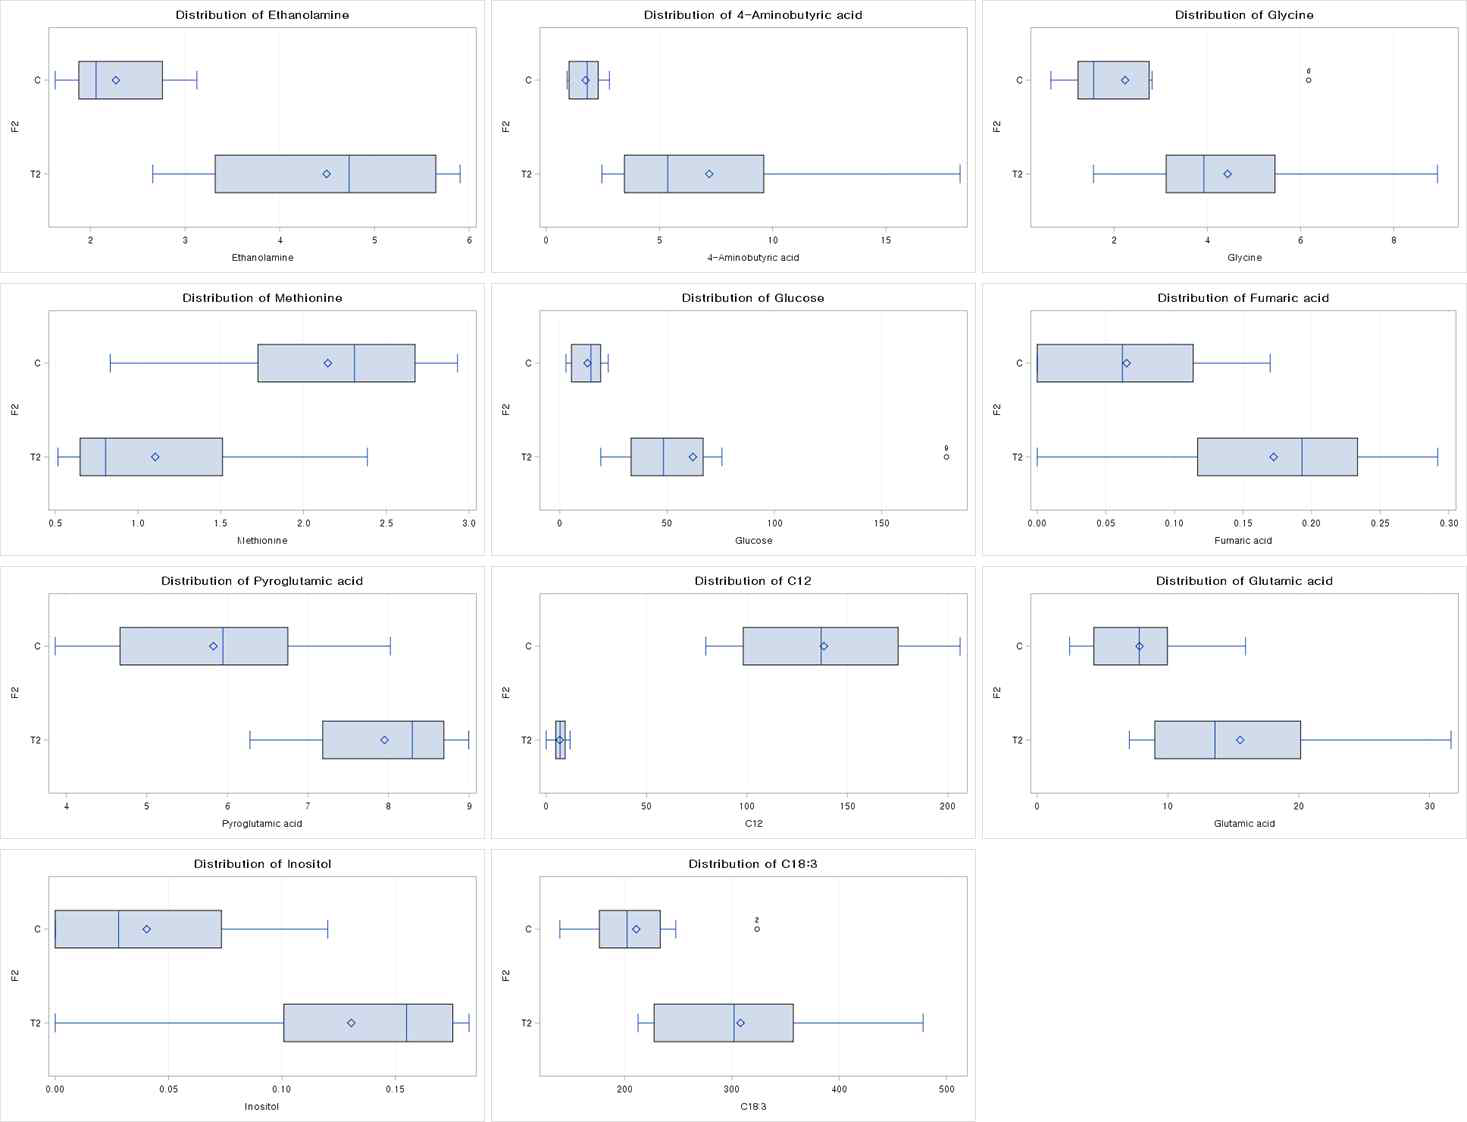 C 및 T2의 8주차 반려견 분변에서 중 유의한 차이(P ＜ 0.05)를 보인 대사산물들의 box plots